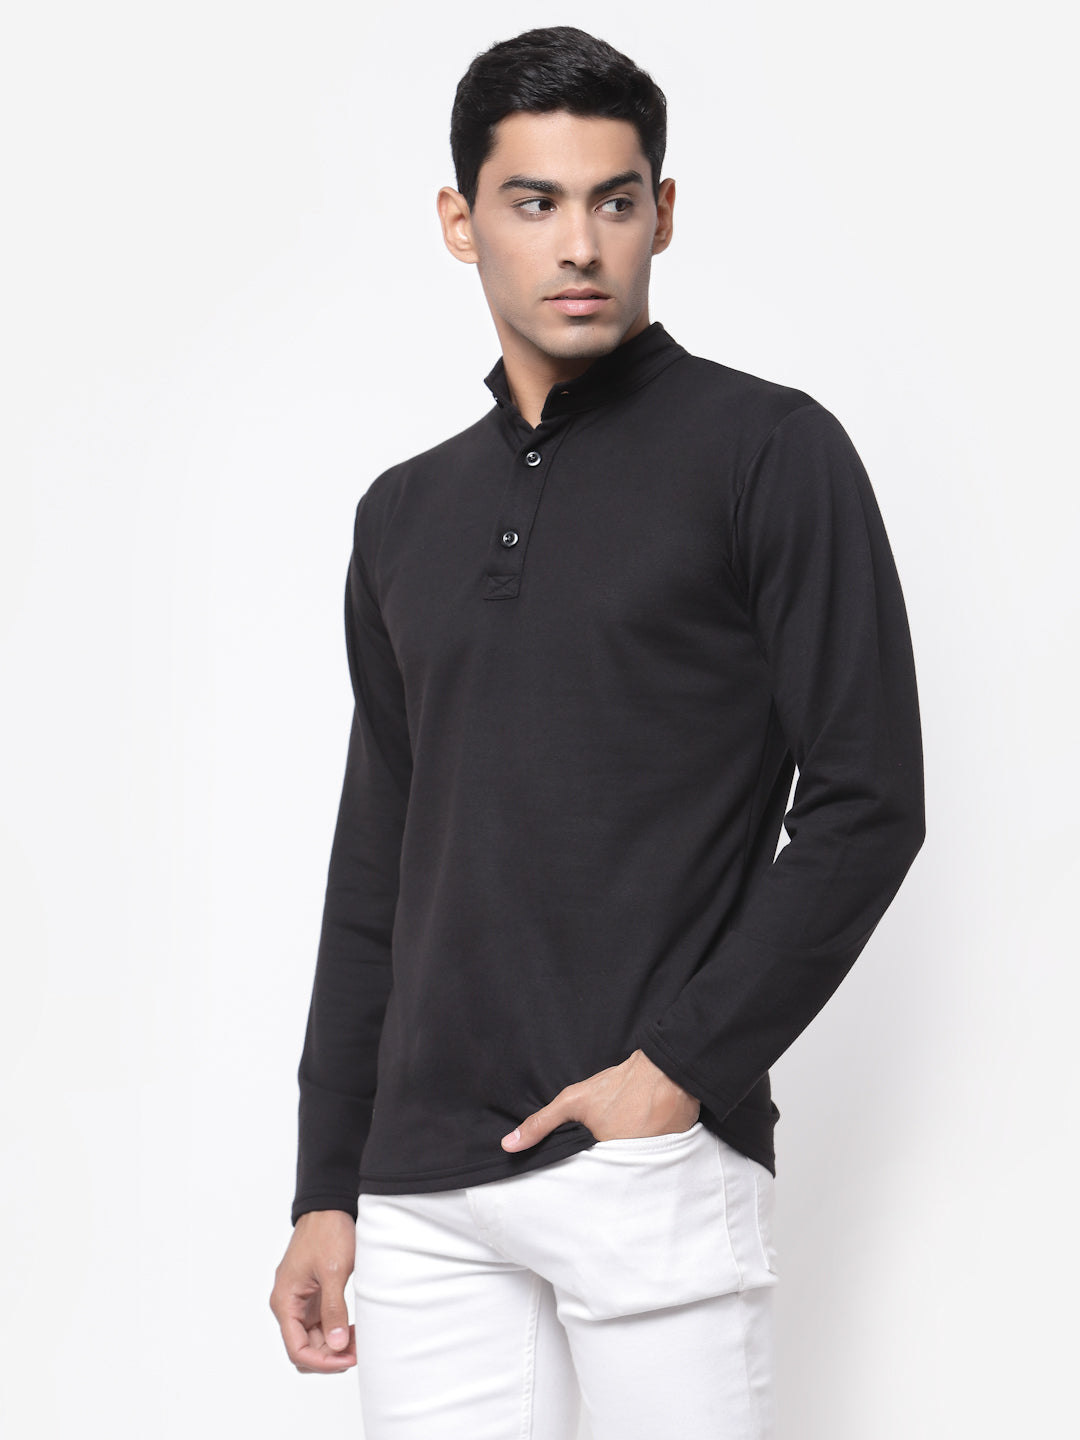 Uzarus Men's Cotton Solid Full Sleeve Mandarin collar T Shirt